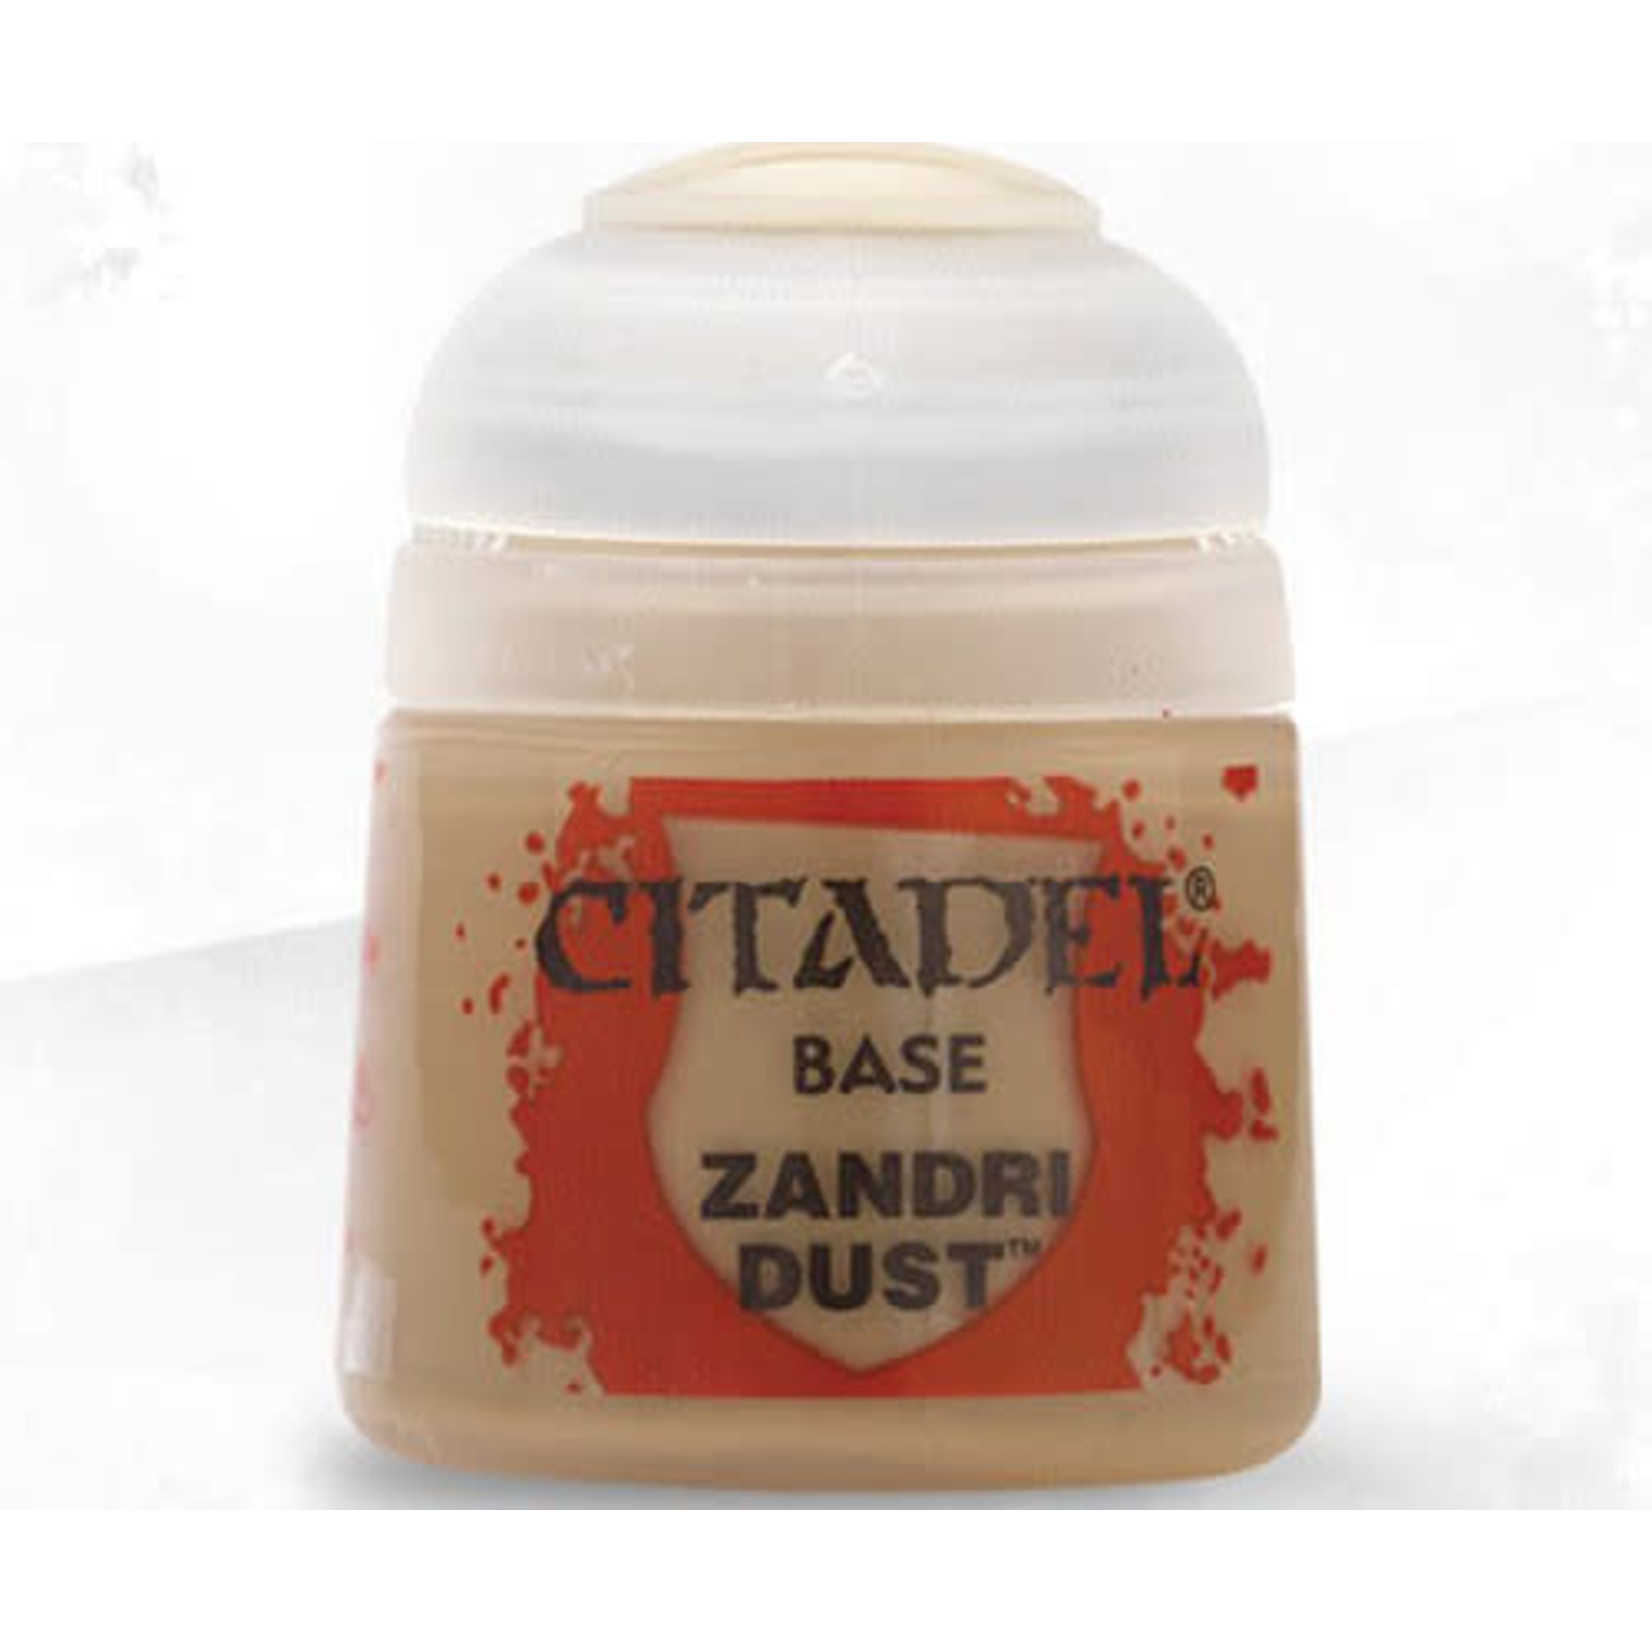 Citadel Citadel Paint - Base: Zandri Dust